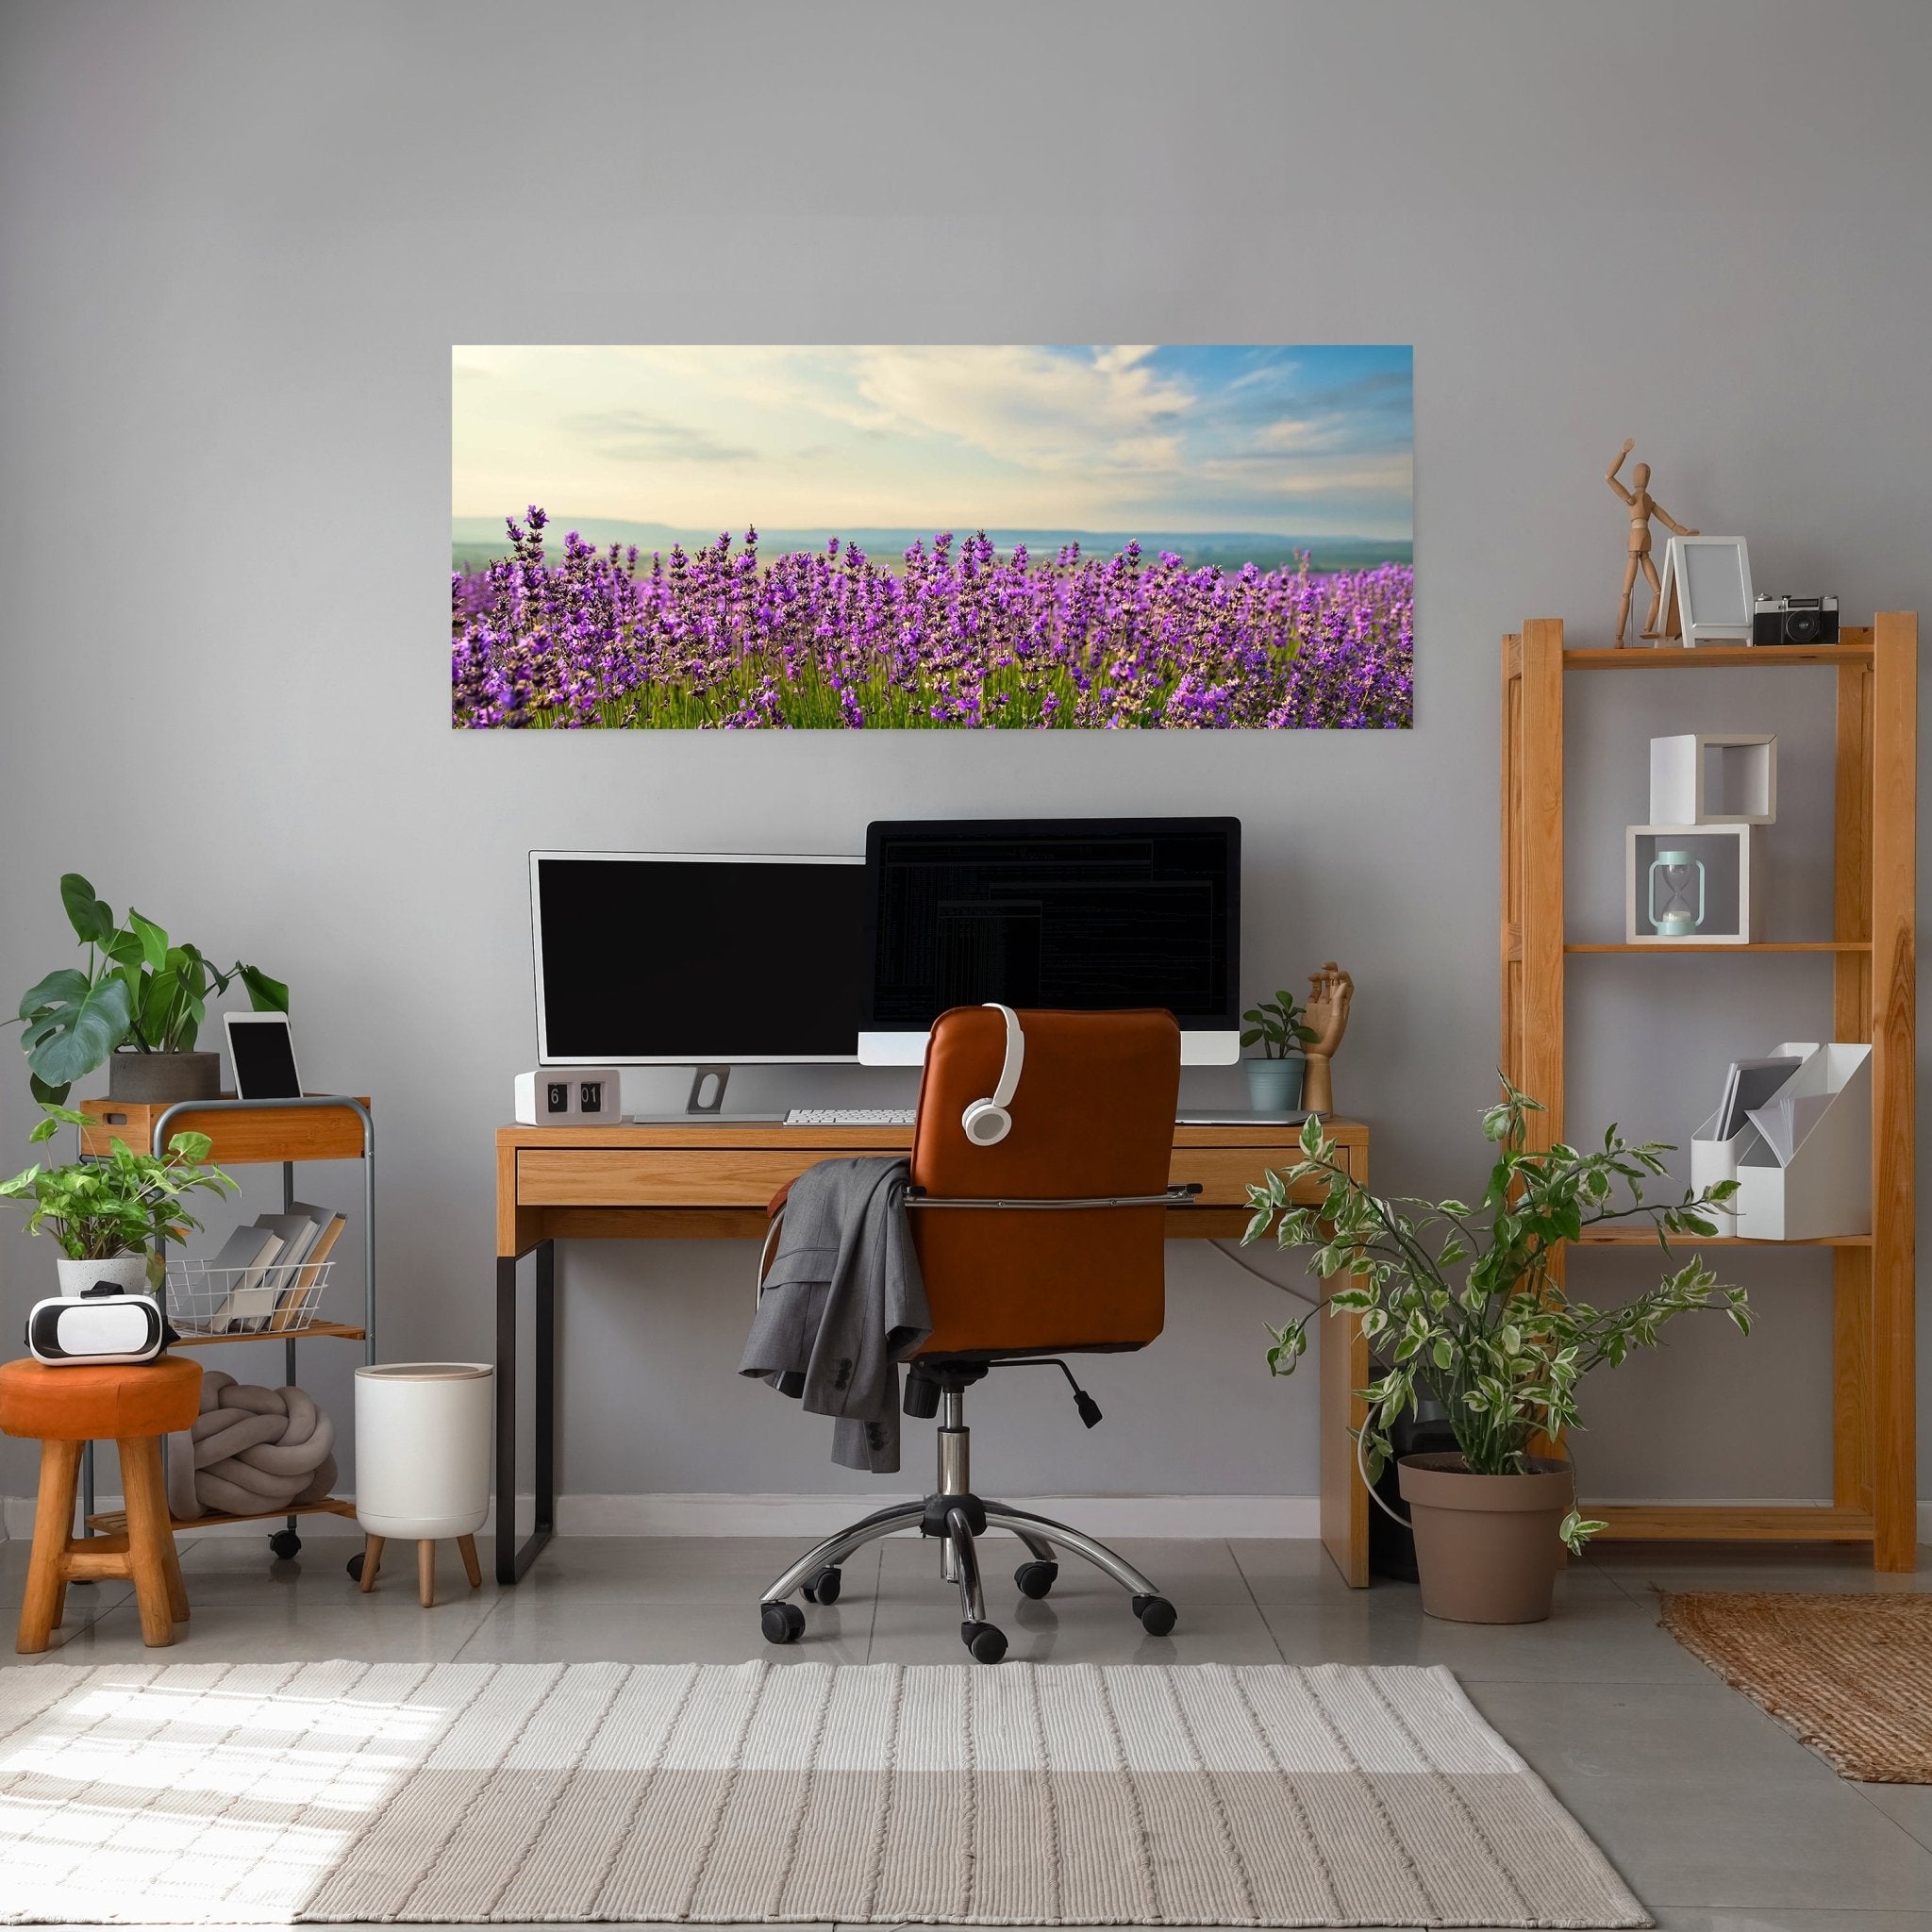 Leinwandbild Lavendel M0411 kaufen - Bild 3